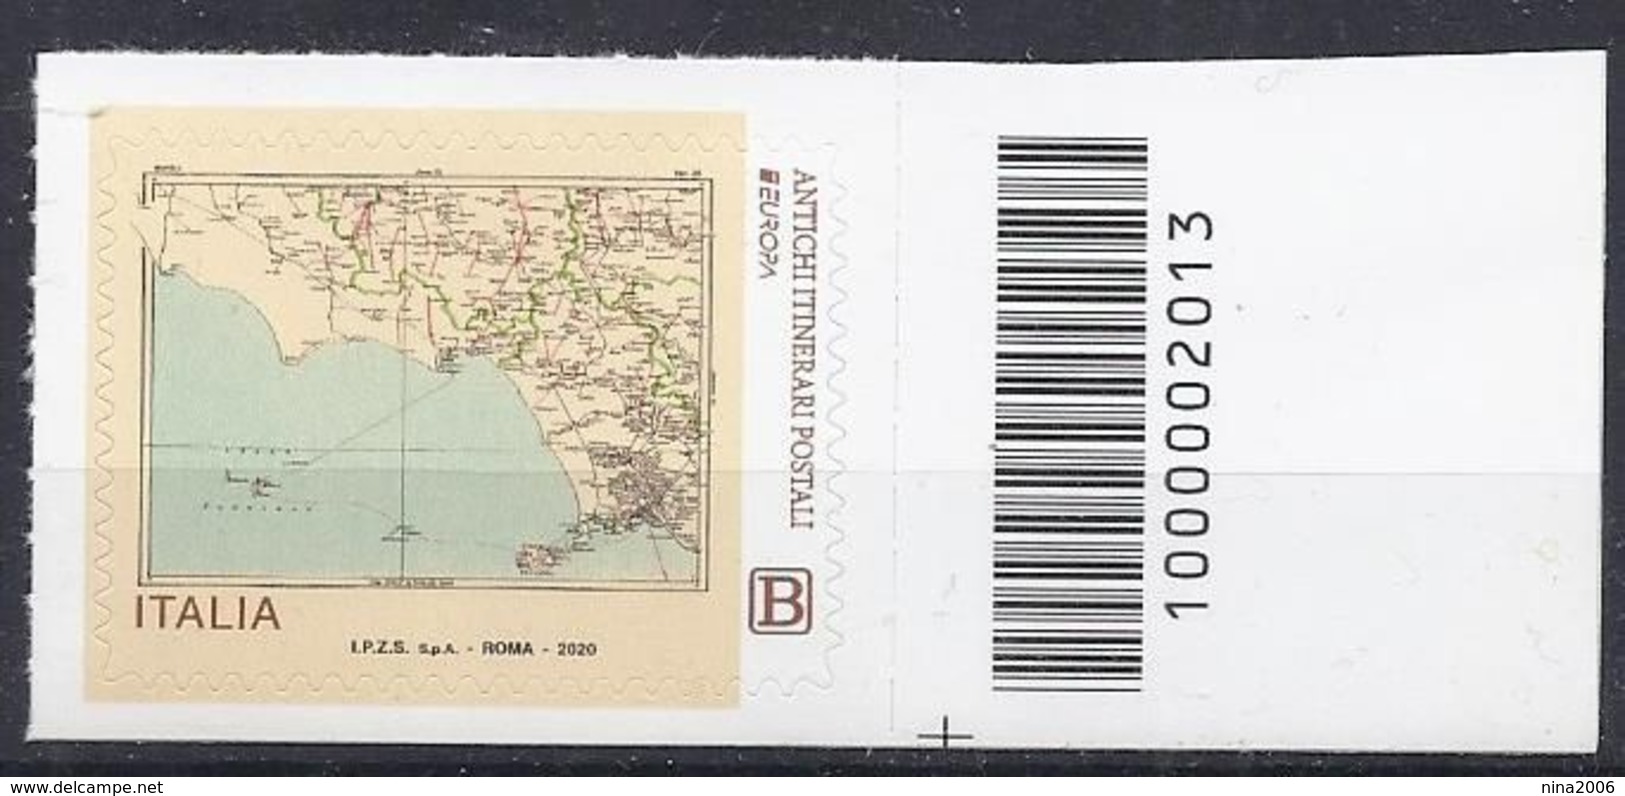 Italia / Italien 2020 Europa Itinerari Postali Tariffa B Con Codice A Barre/ Europa Tarif B Postfrisch Mit Strichkode - Bar Codes